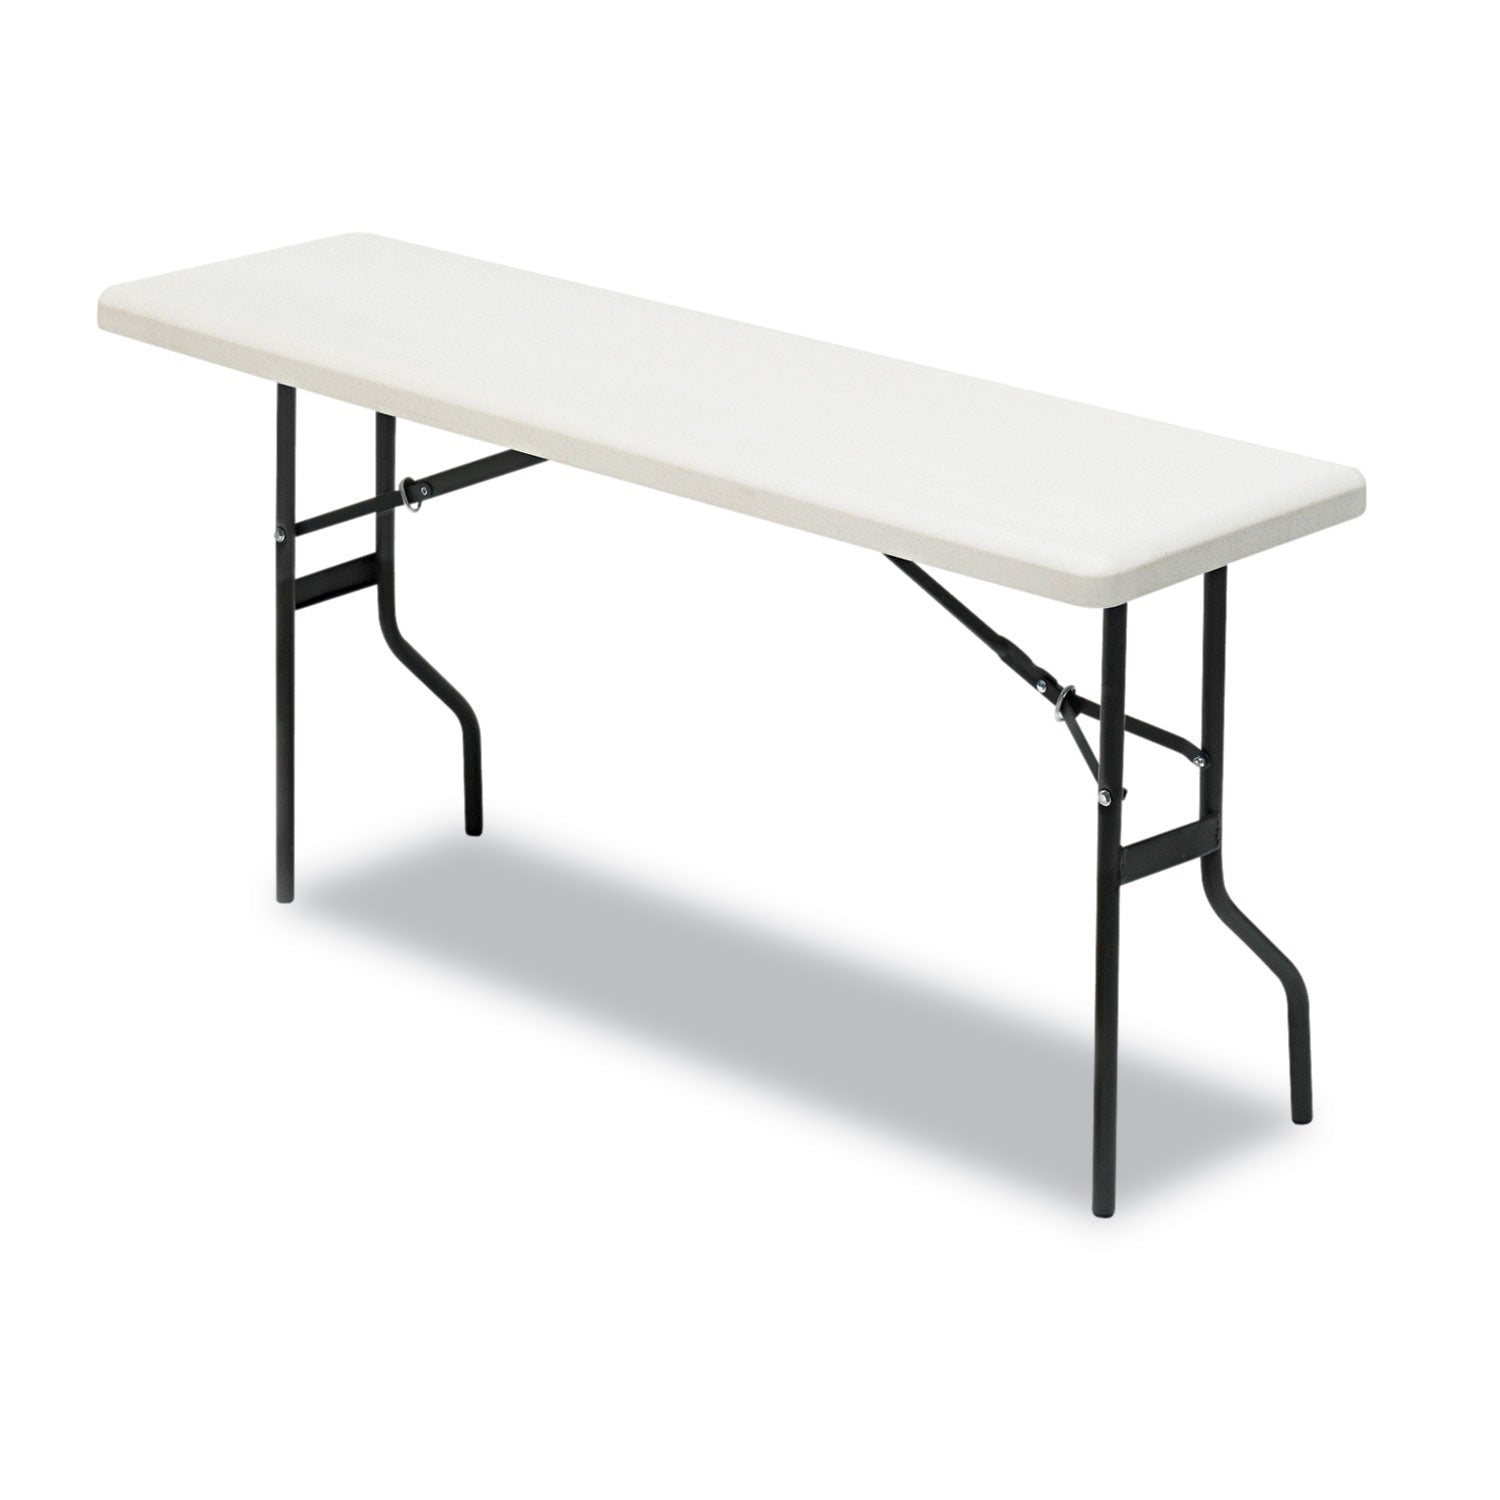 IndestrucTable Classic Folding Table, Rectangular, 72" x 18" x 29", Platinum - 